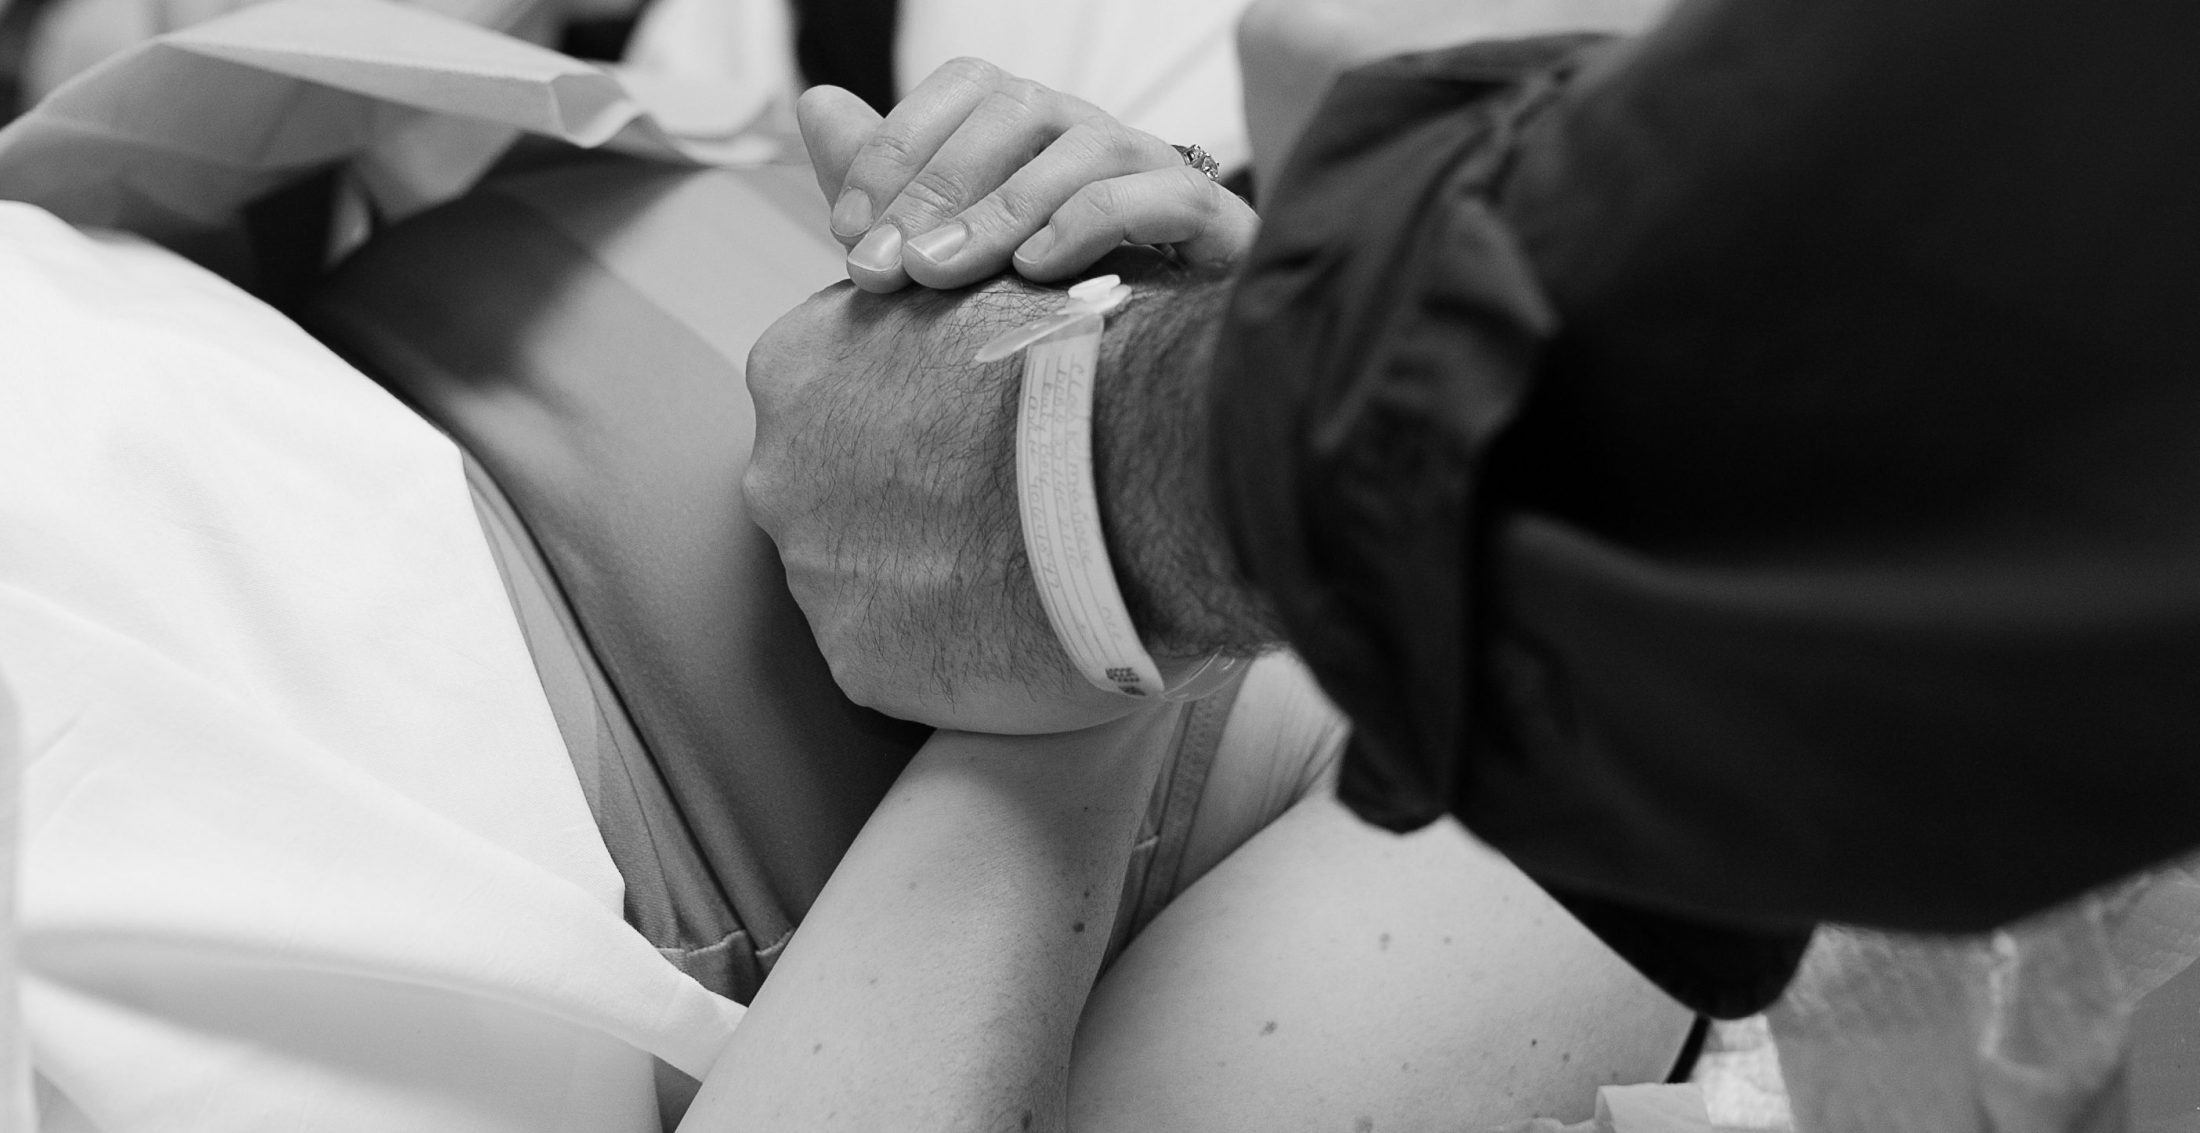 Brimleys holding hands in hospital